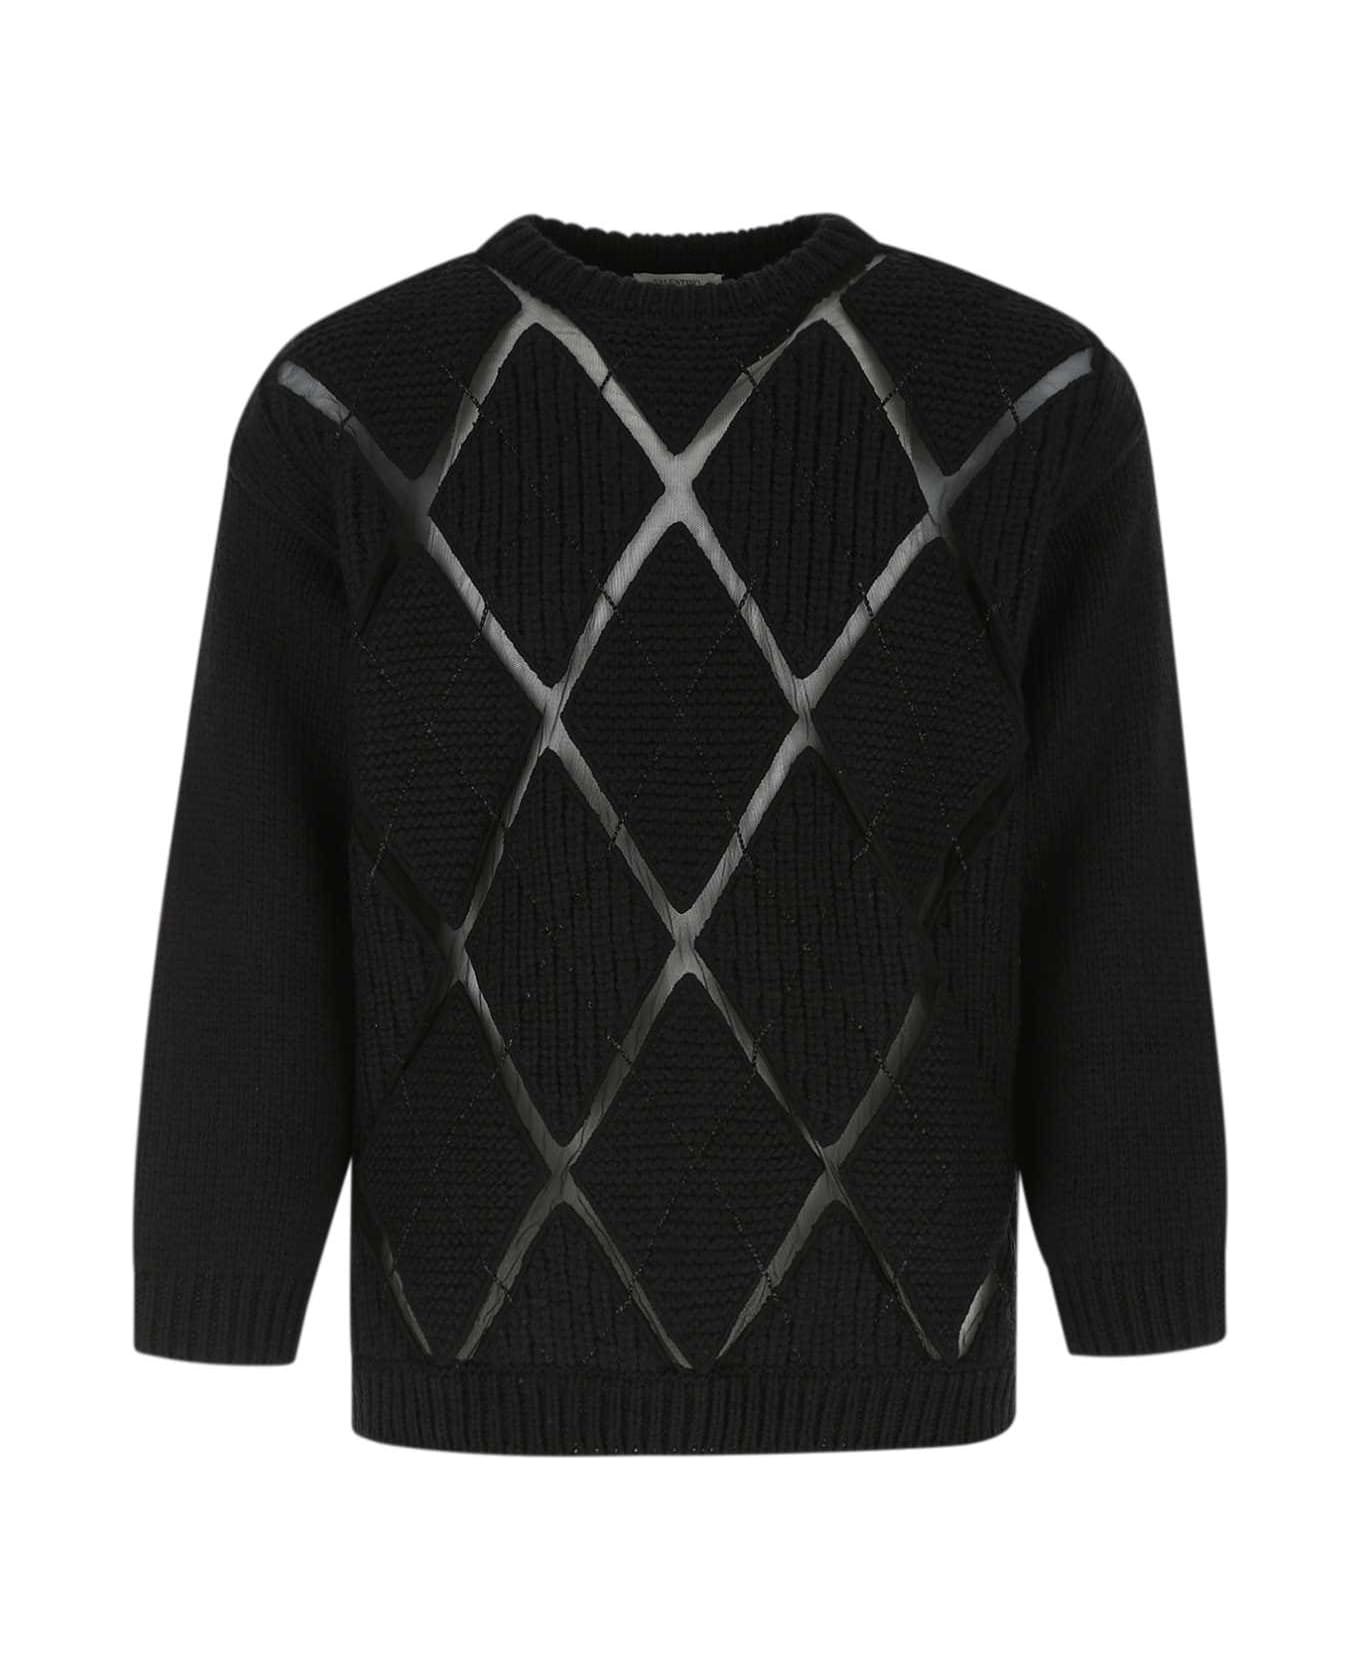 Valentino Garavani Black Wool Sweater - N01